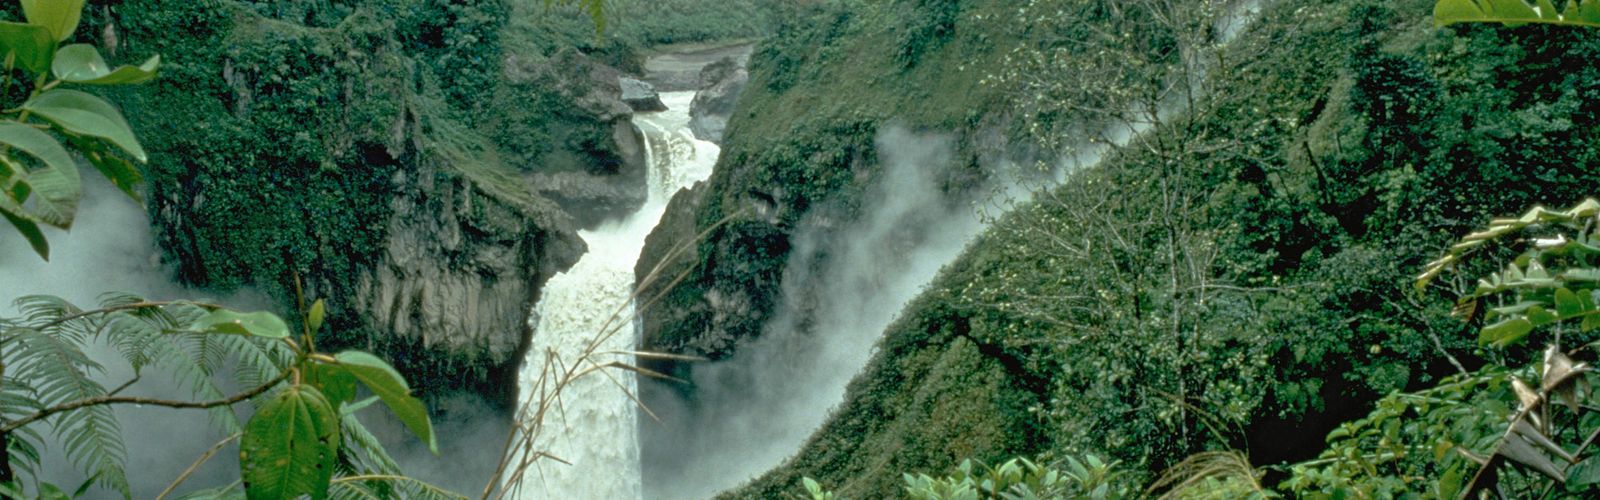 Cascada San Rafael en la Reserva Ecológica Cayambe-Coca en Ecuador